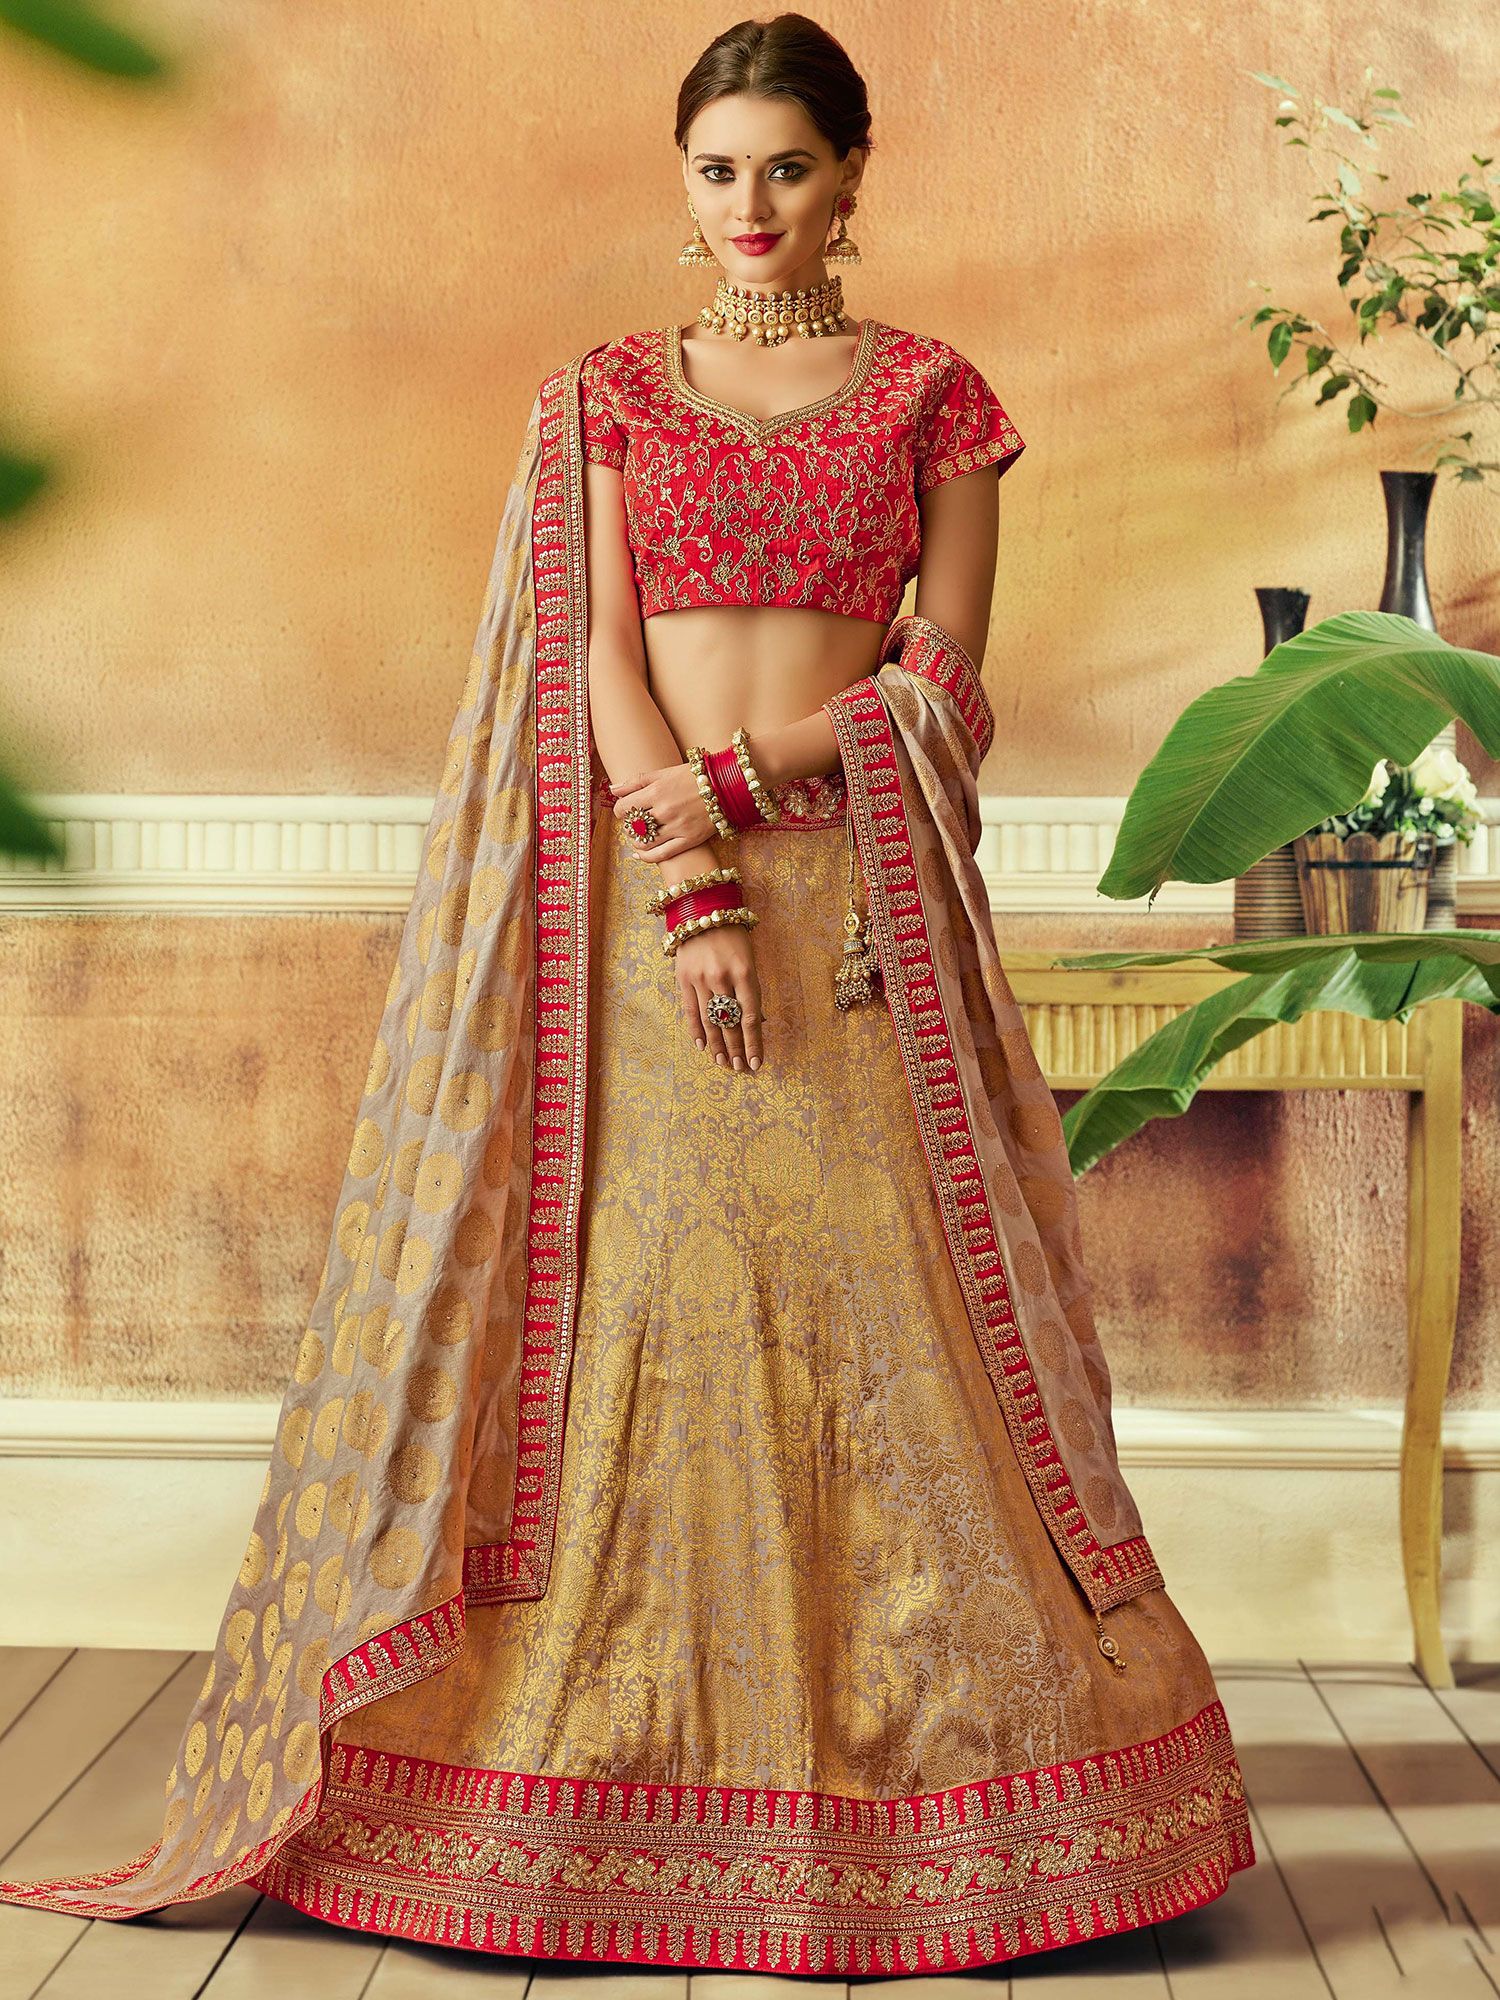 Fascinating Golden And Red Bridal Lehenga at best price in Delhi